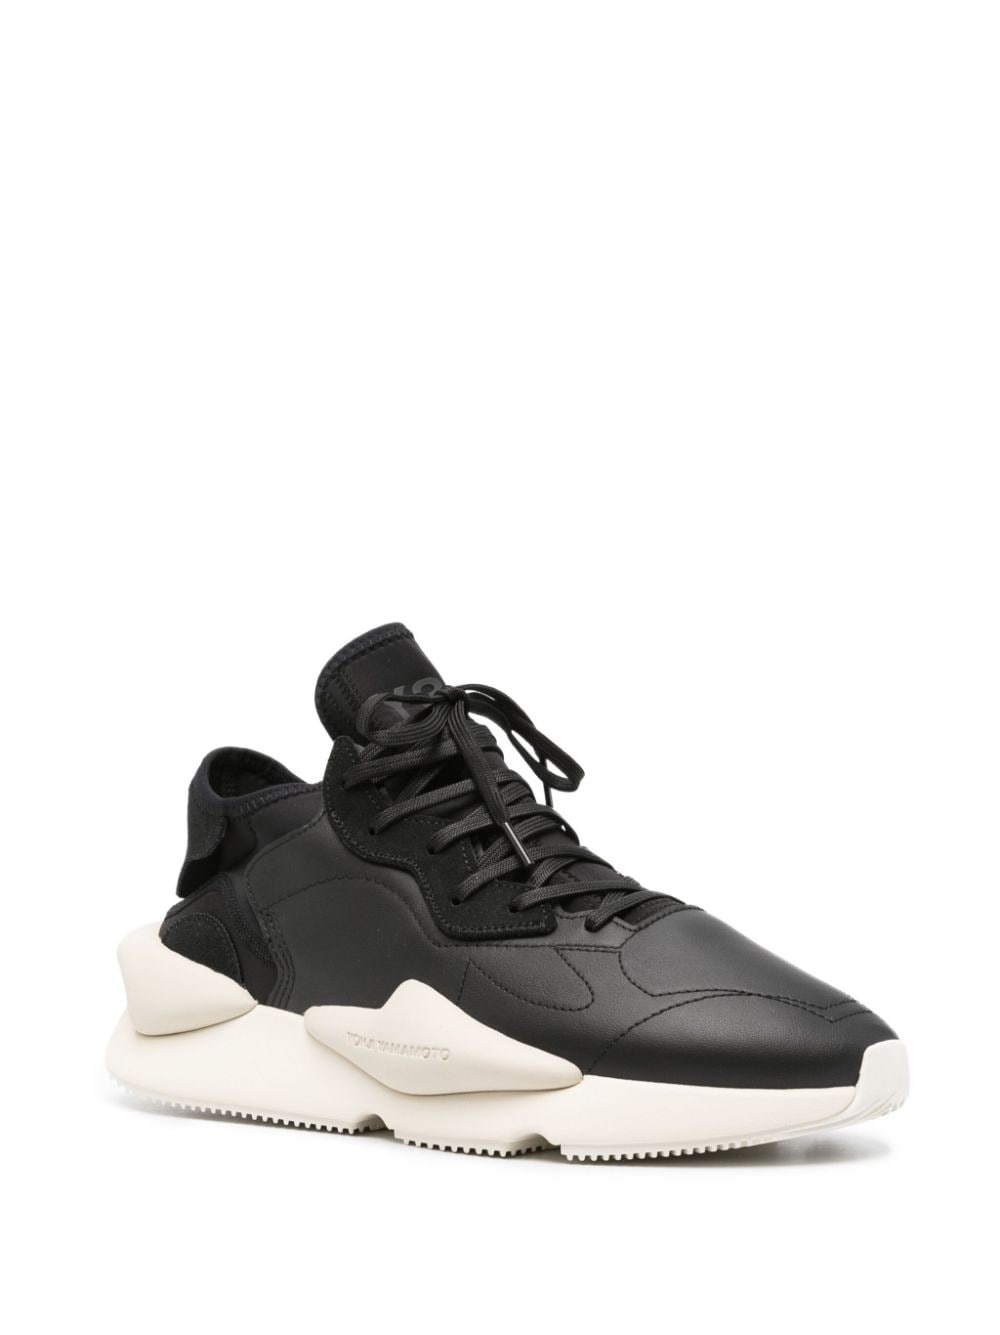 Kaiwa leather sneakers - 2